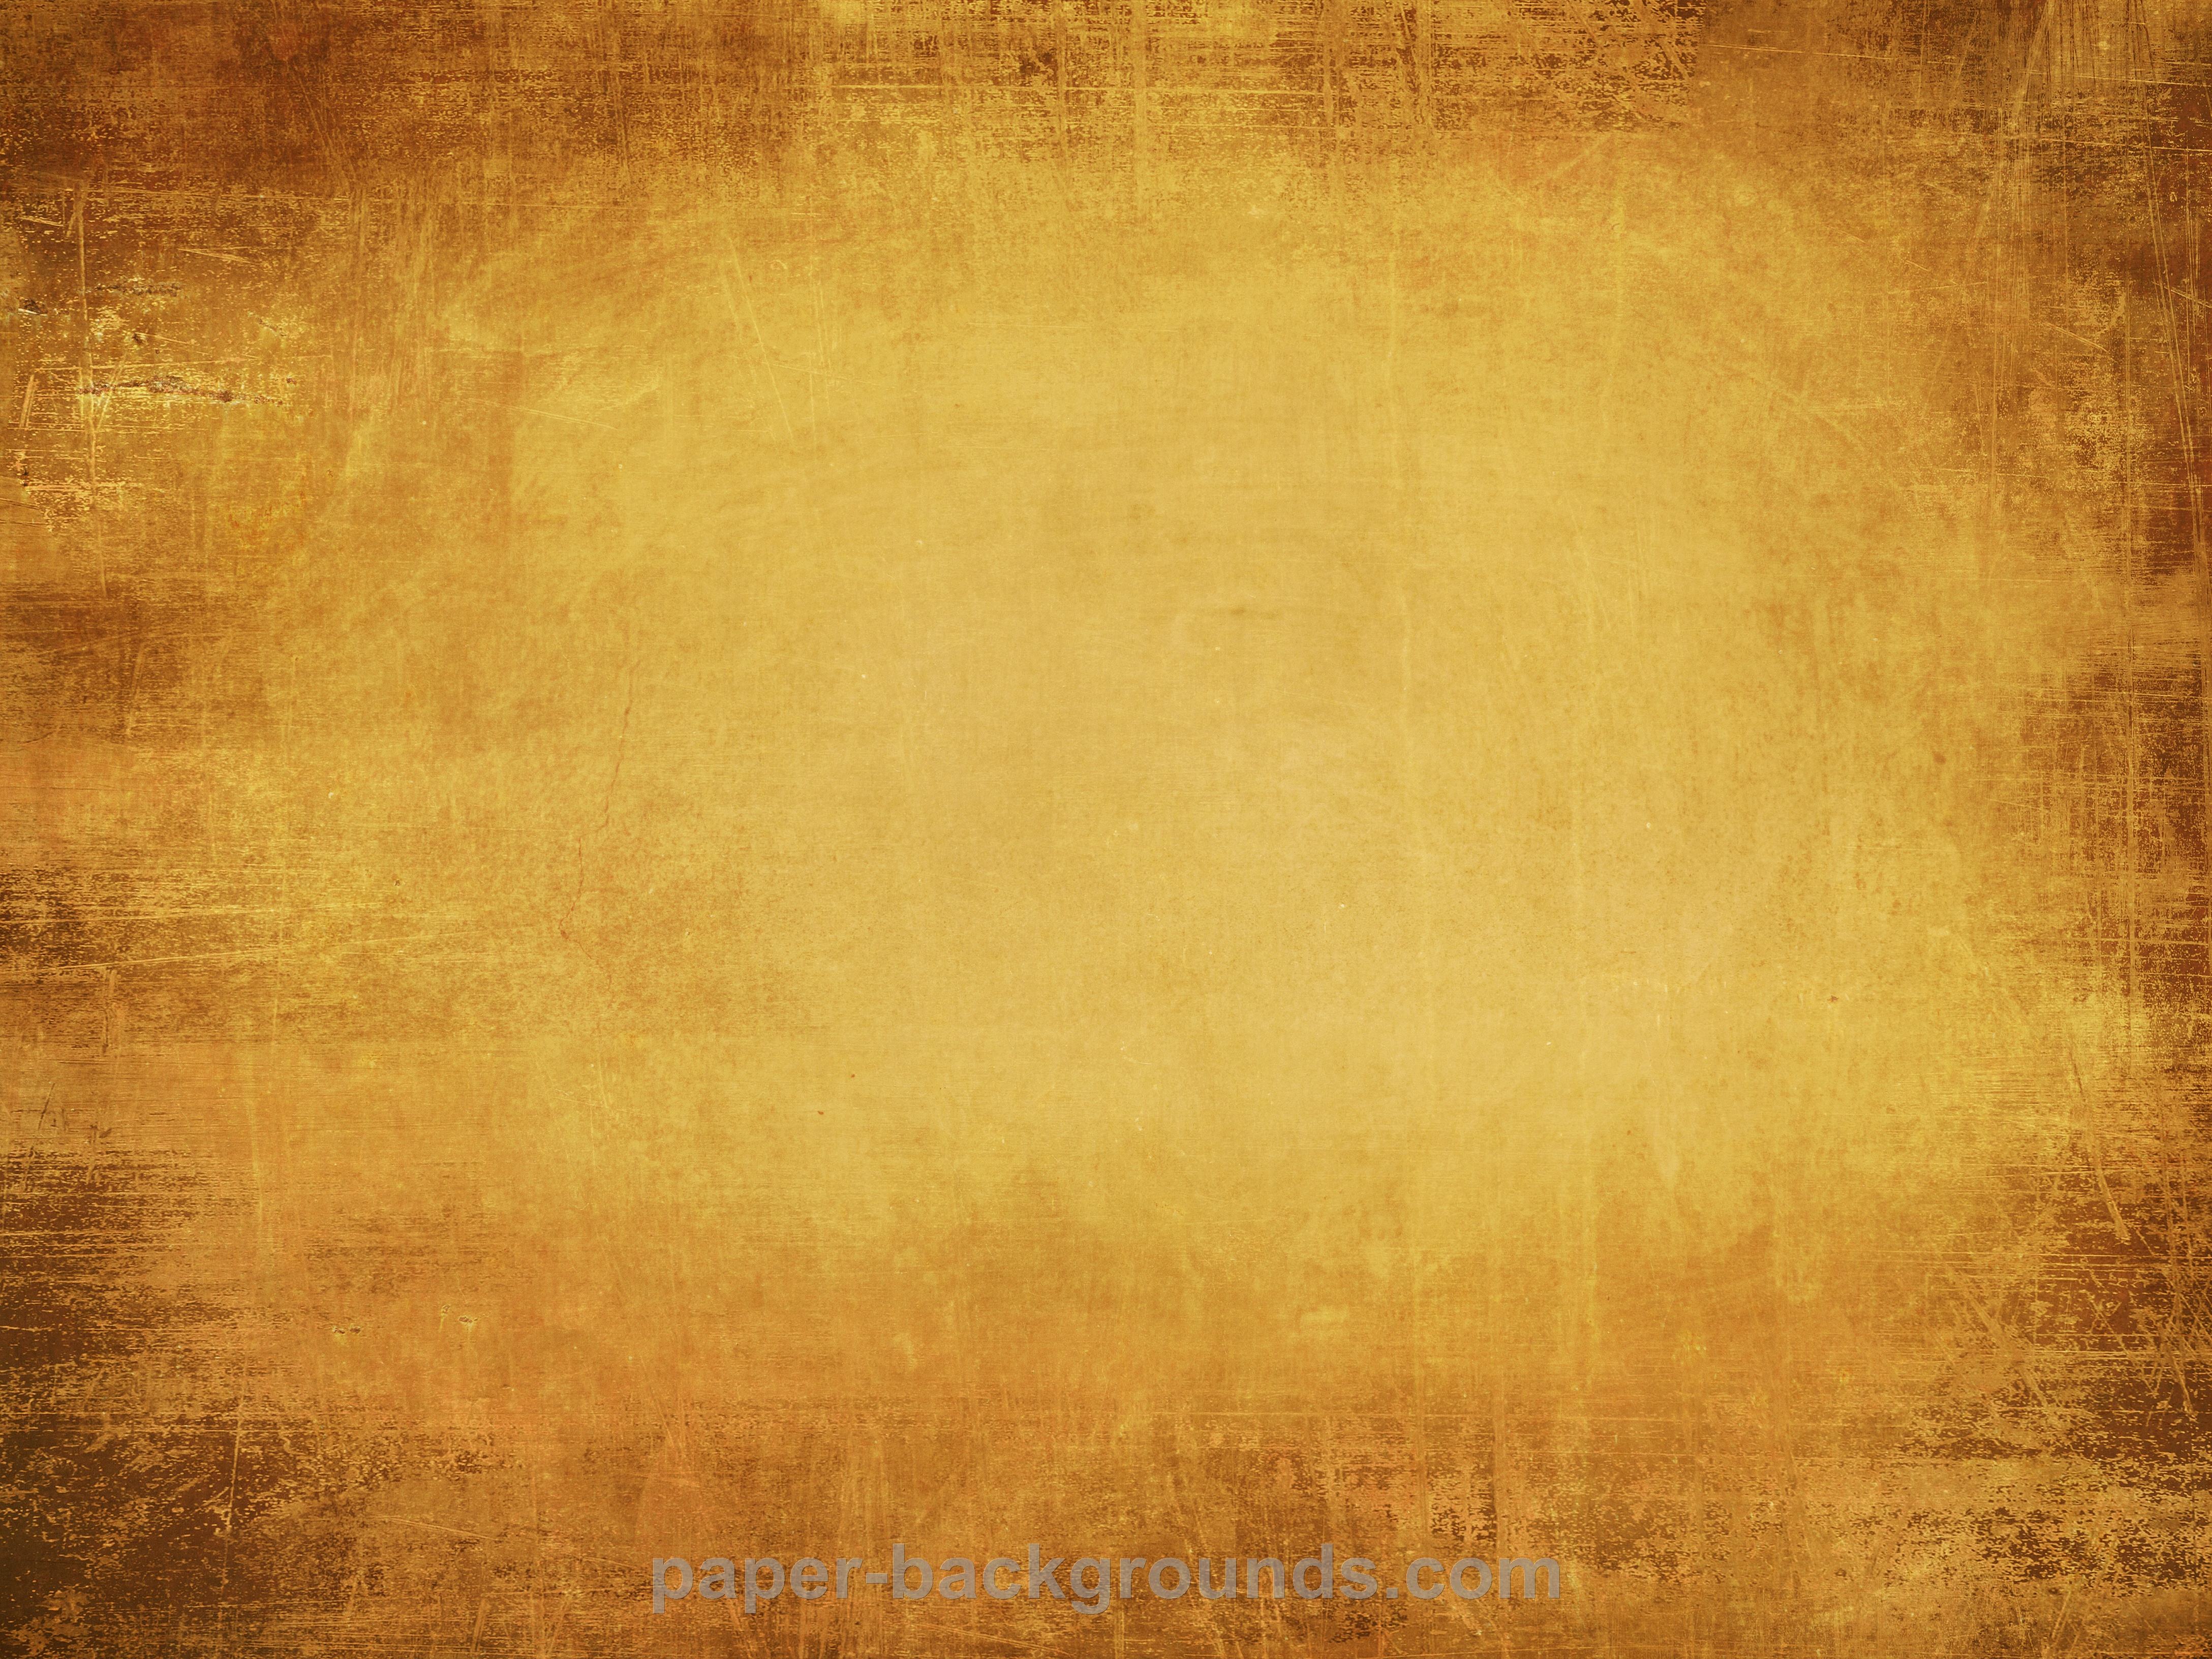 Paper Backgrounds | orange-grunge-background